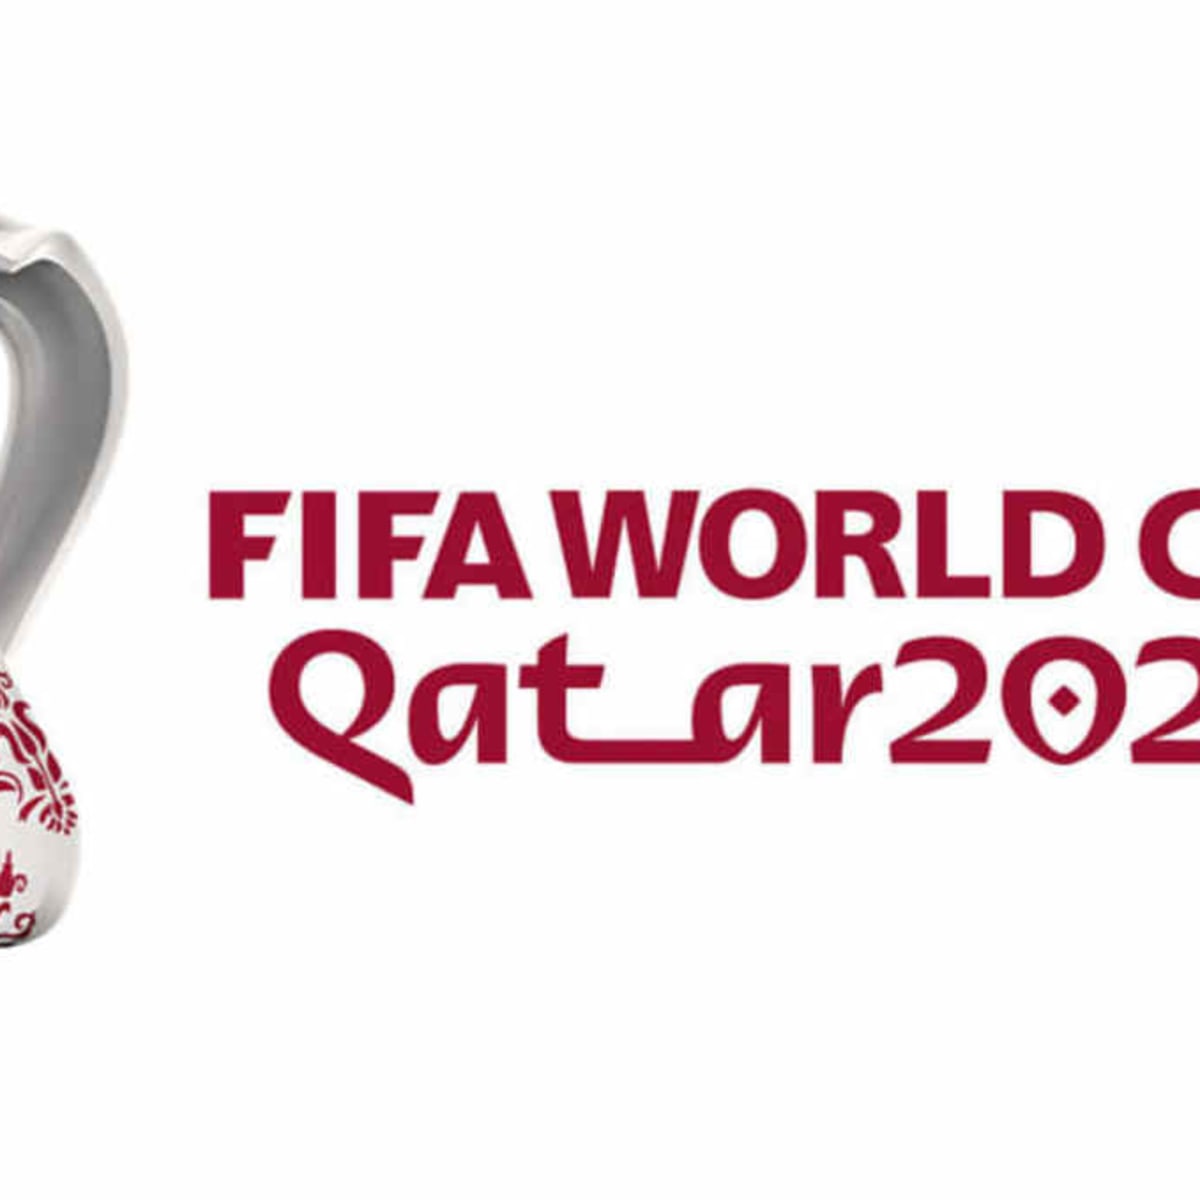 Qatar 2022 Football World Cup Logo Revealed - Logo-Designer.co